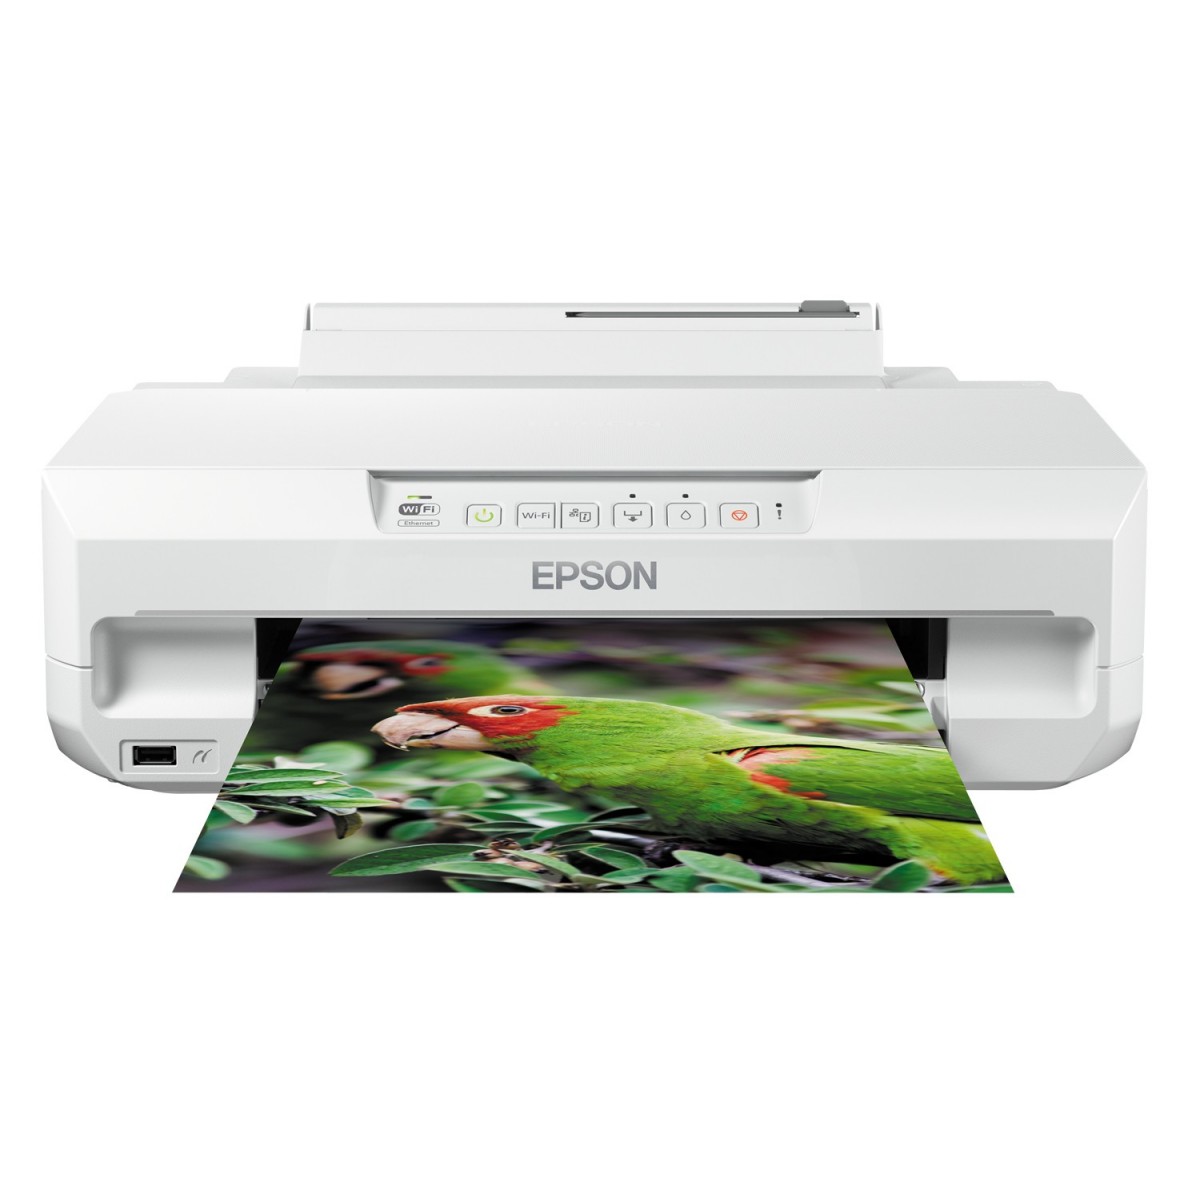 Epson Expression Photo XP-55 - Inkjet - 5760 x 1400 DPI - A4 (210 x 297 mm) - Borderless printing - Duplex printing - Wi-Fi